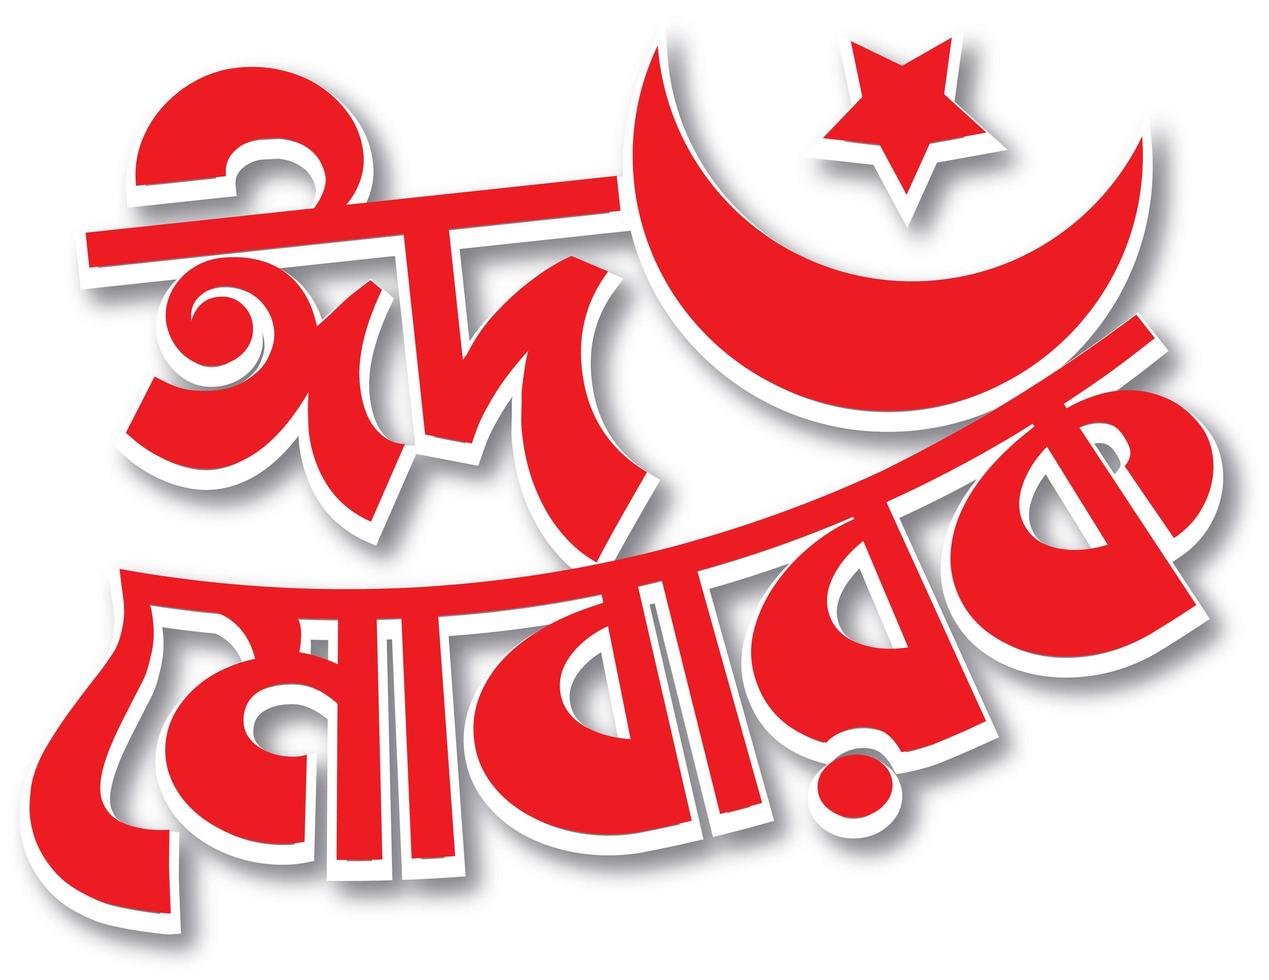 eid mubarak bengalese tipografia design foto